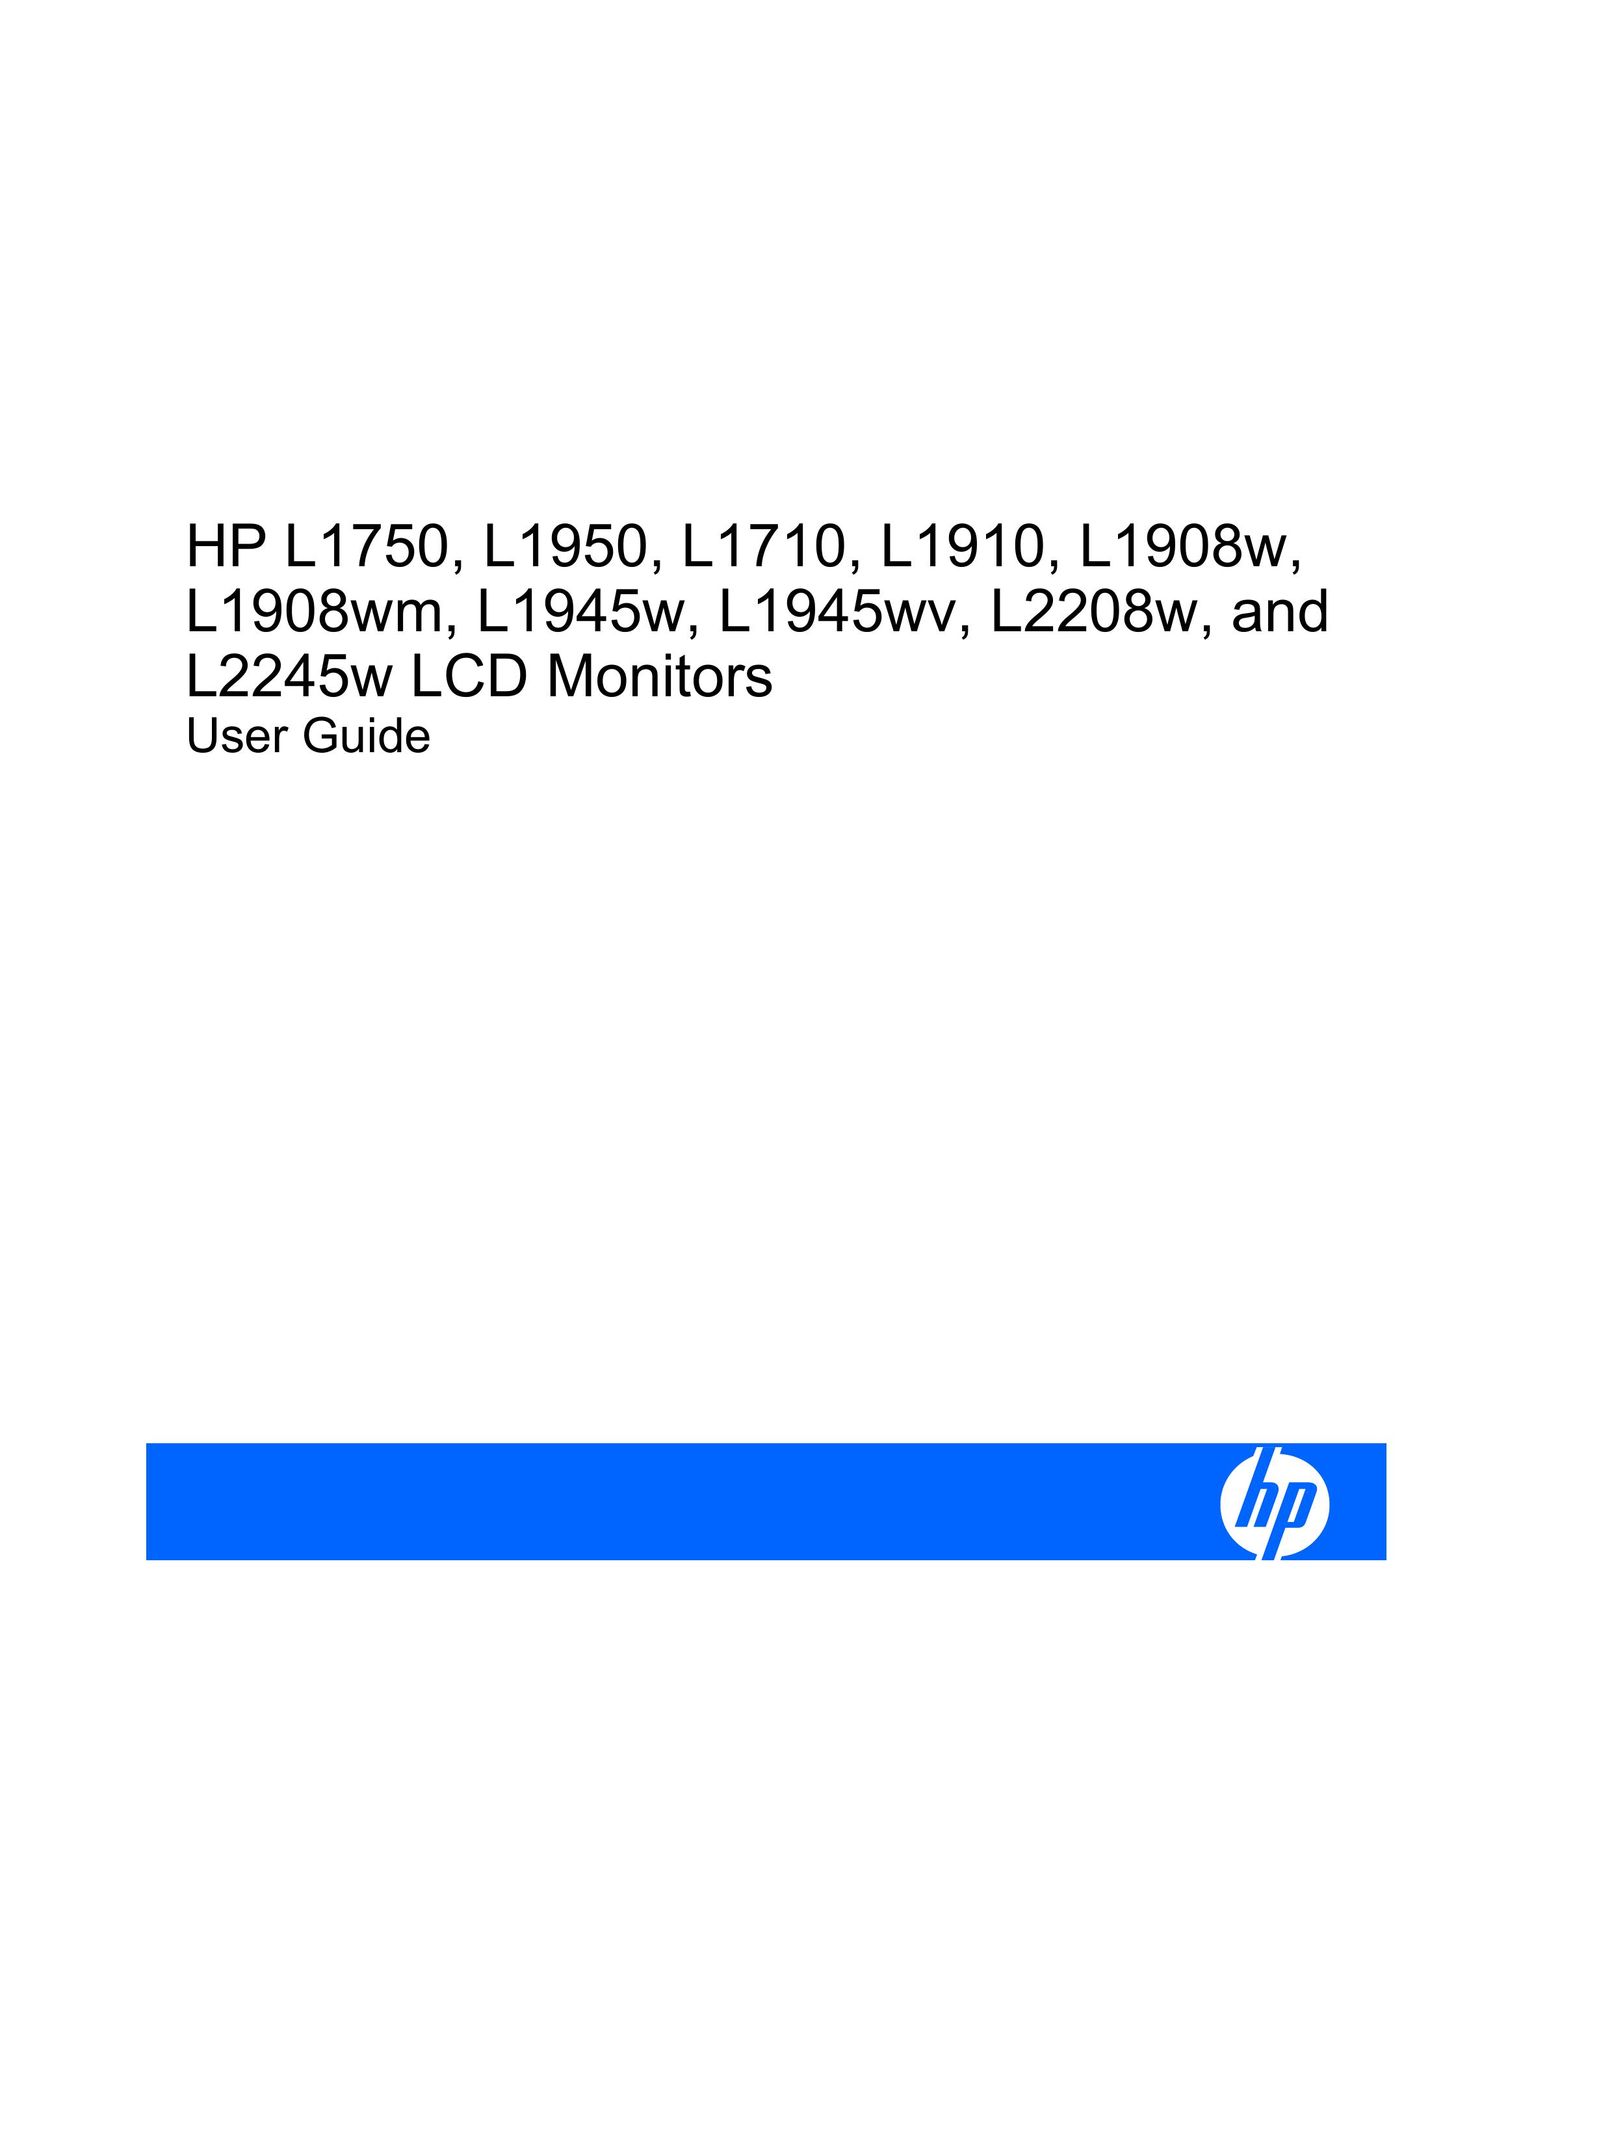 HP (Hewlett-Packard) L1950 Flat Panel Television User Manual